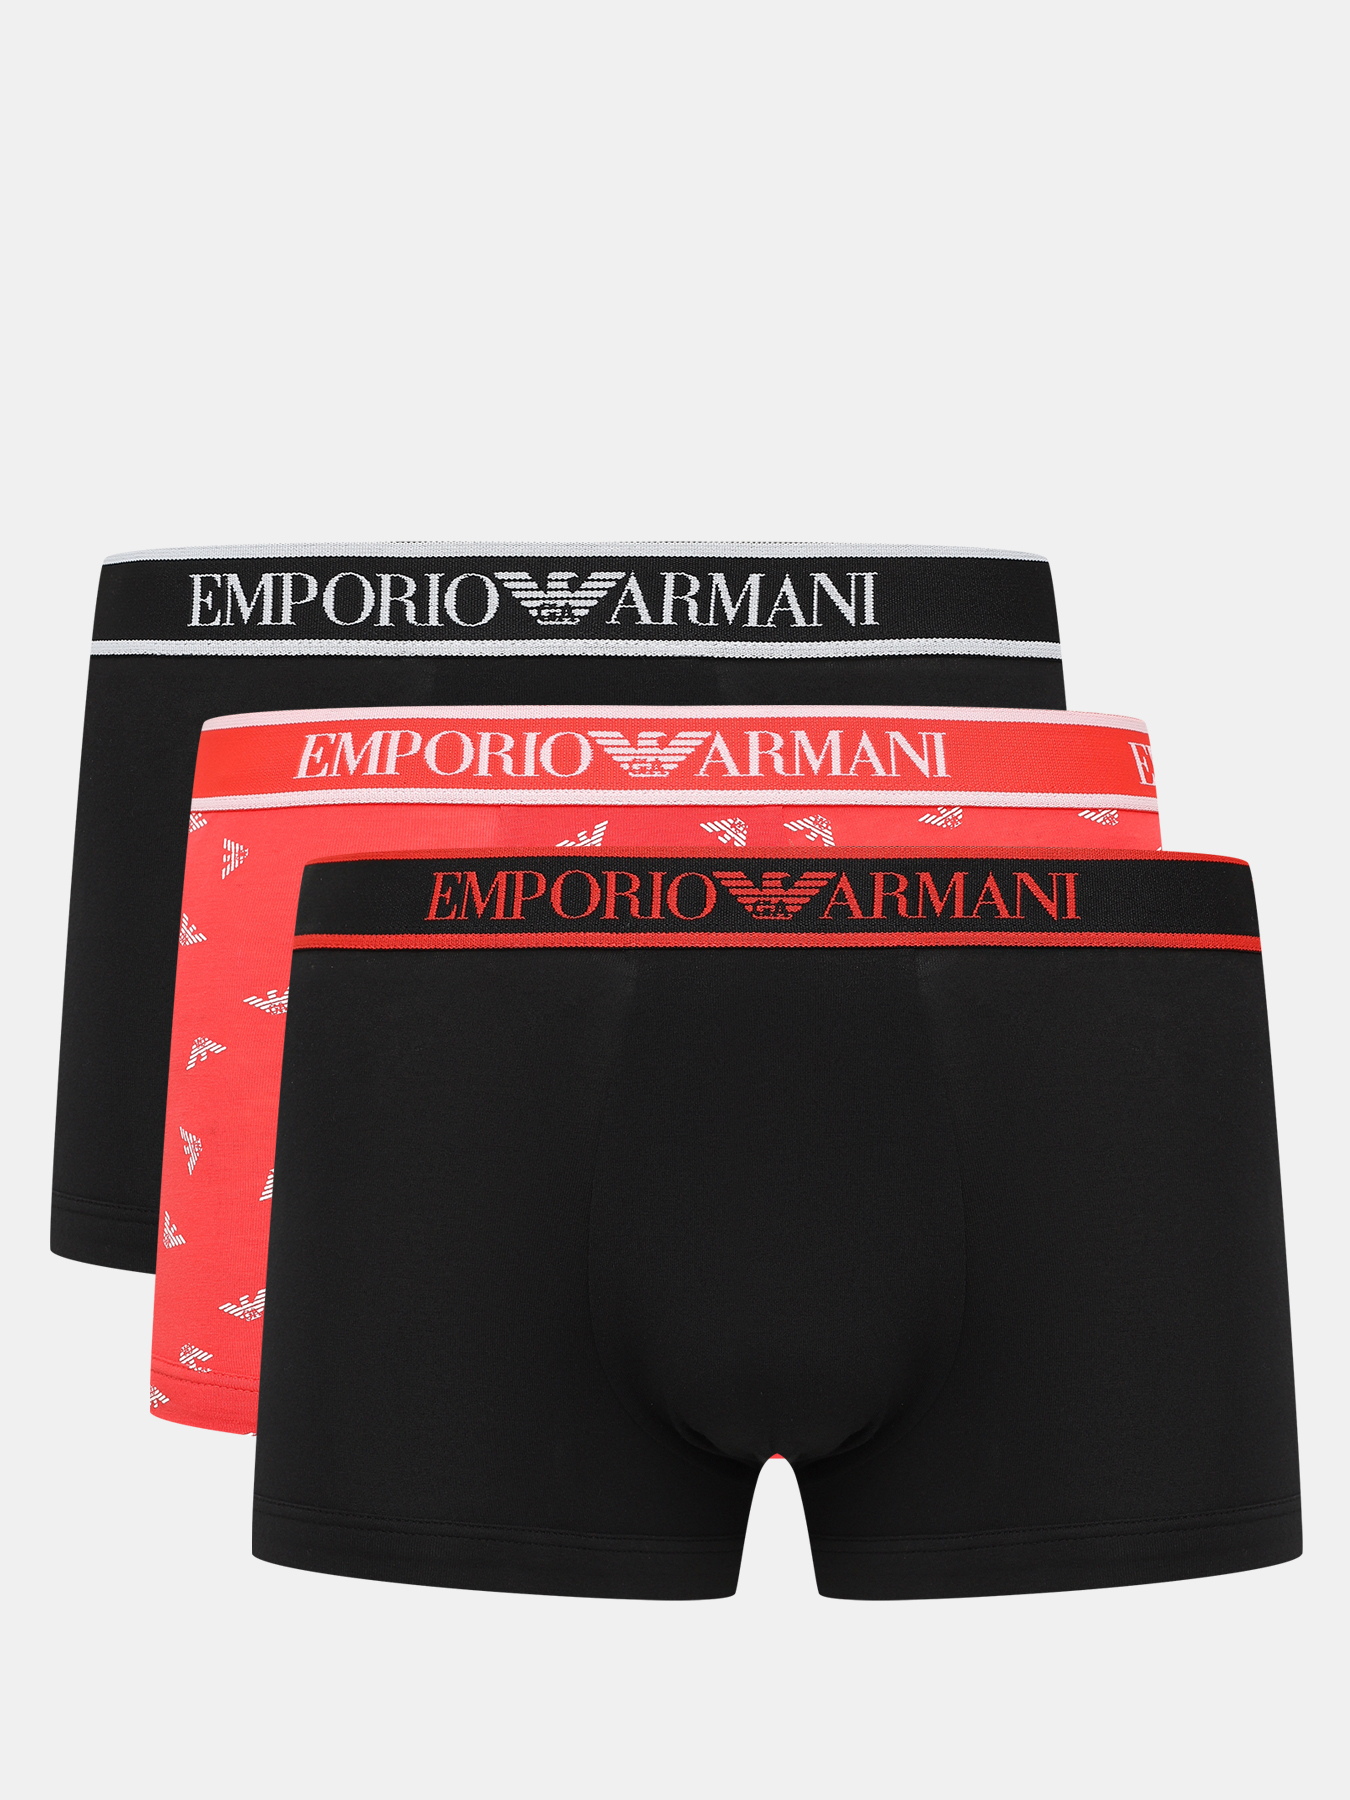 Боксеры (3 шт) Emporio Armani 438108-045, цвет мультиколор, размер 52